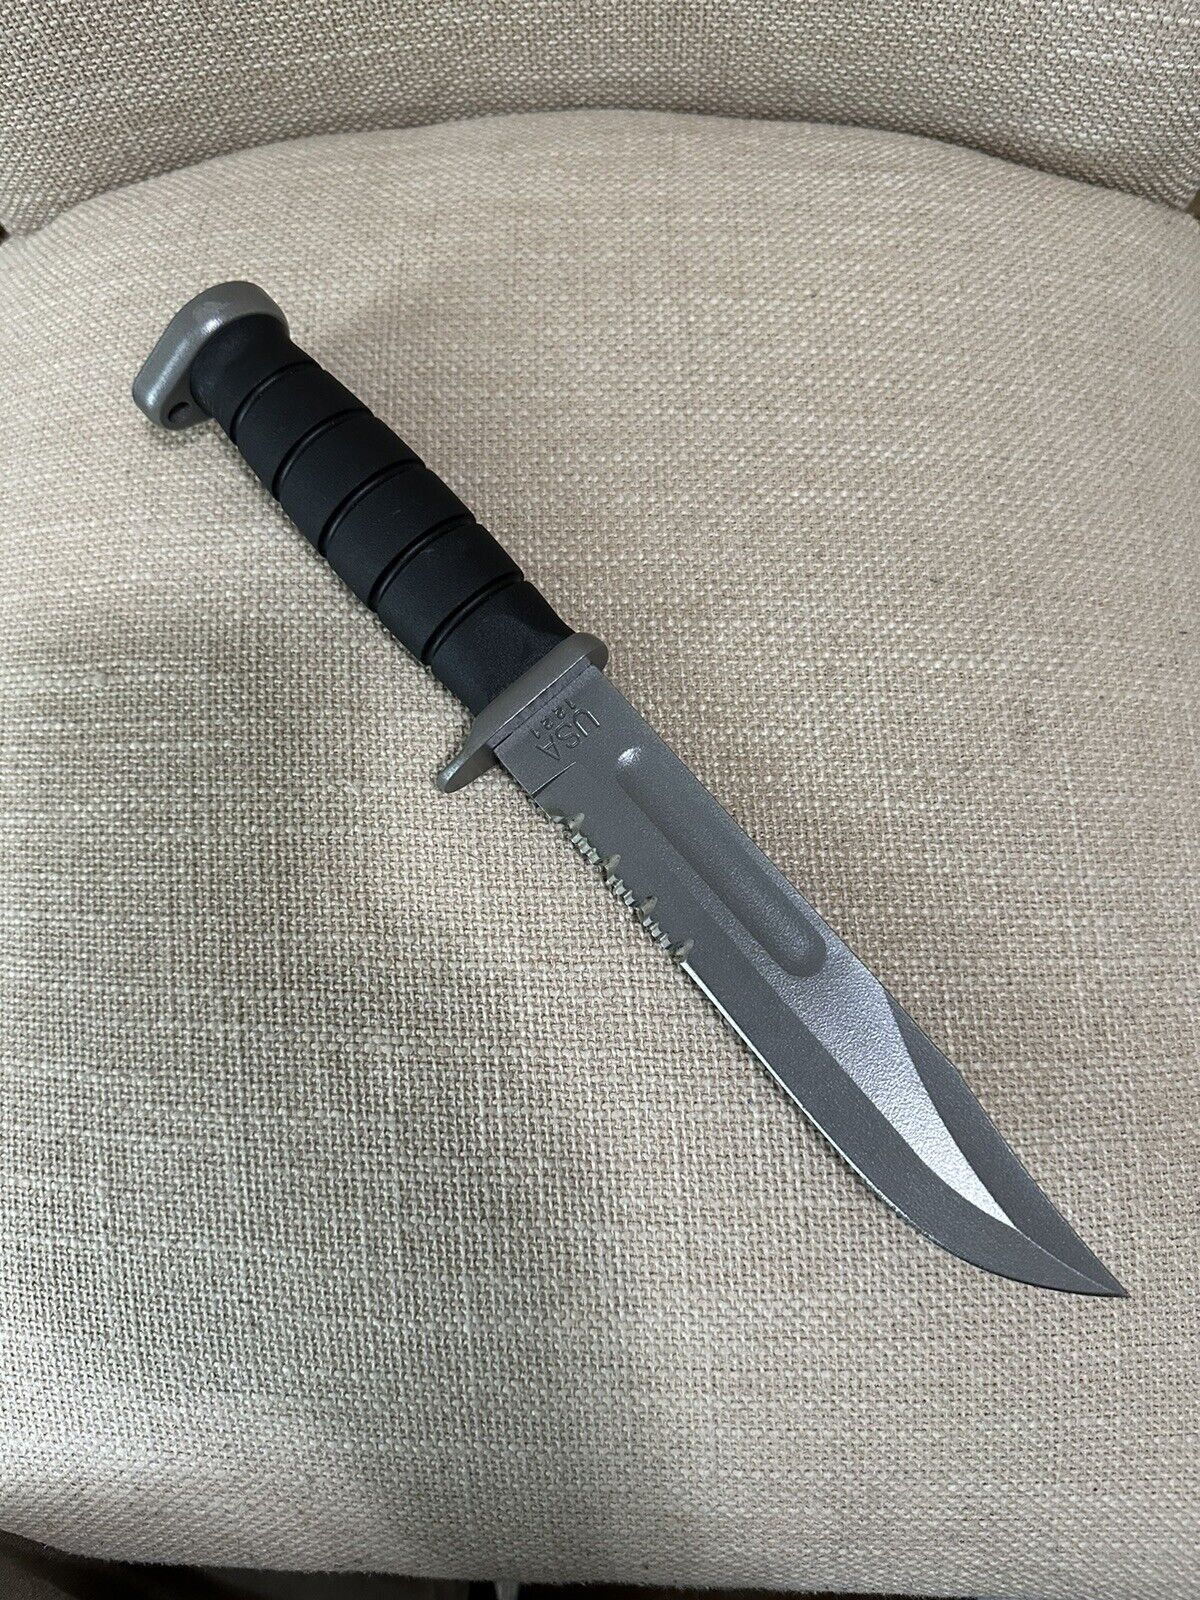 Ka-Bar 1221 Next Generation Fighting Knife